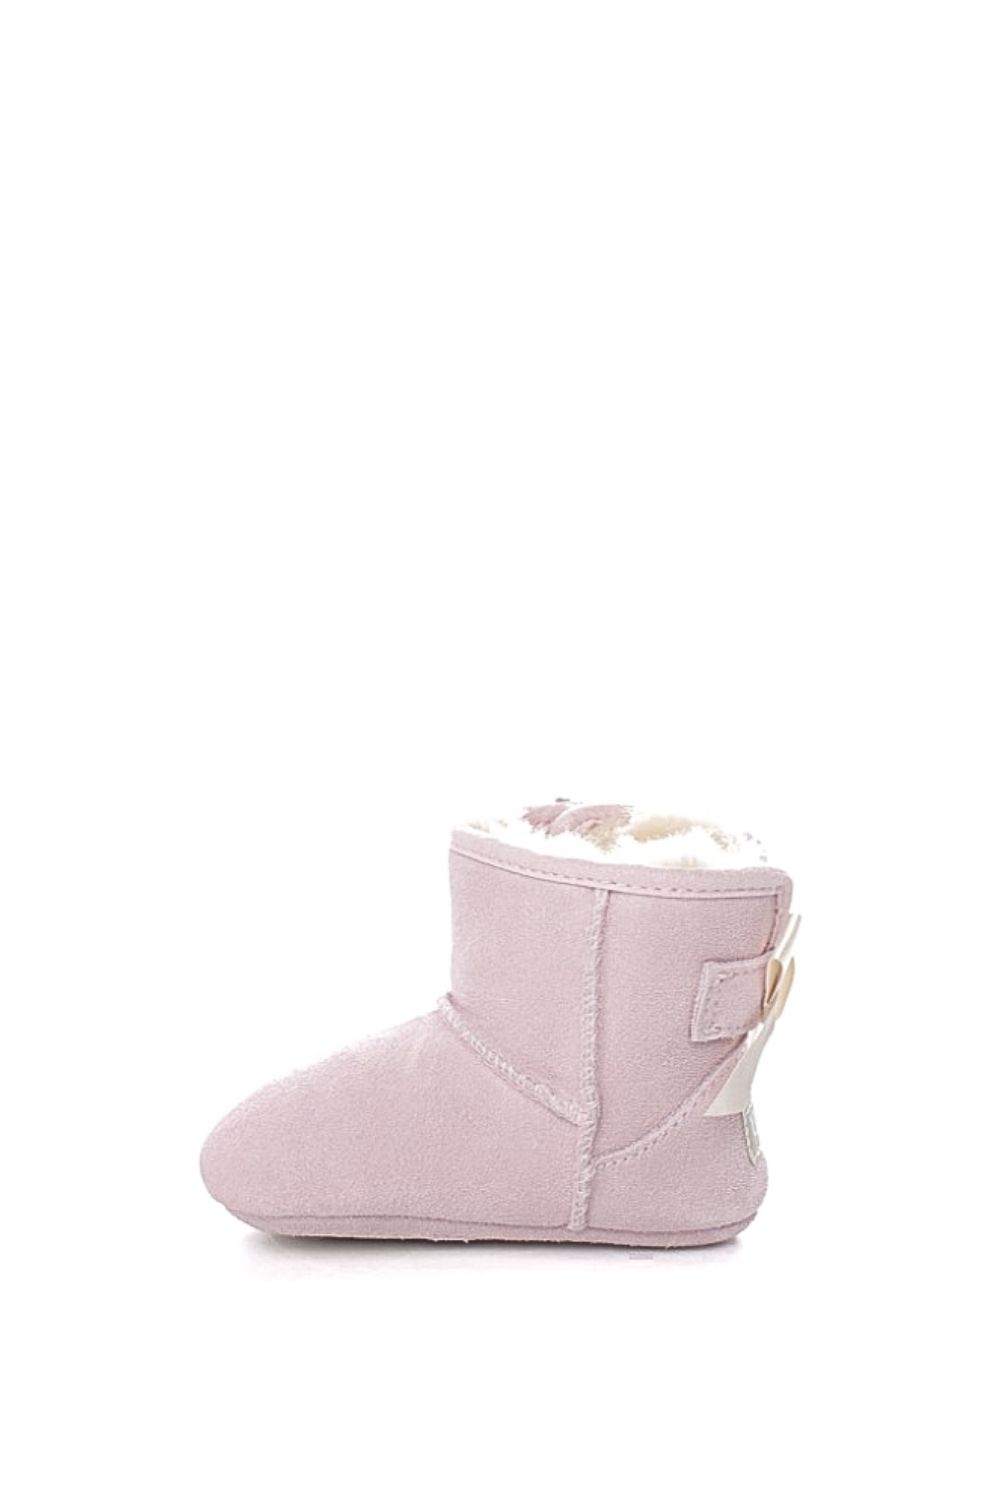 UGG - Βρεφικά μποτάκια UGG I JESSE BOW II ροζ Παιδικά/Baby/Παπούτσια